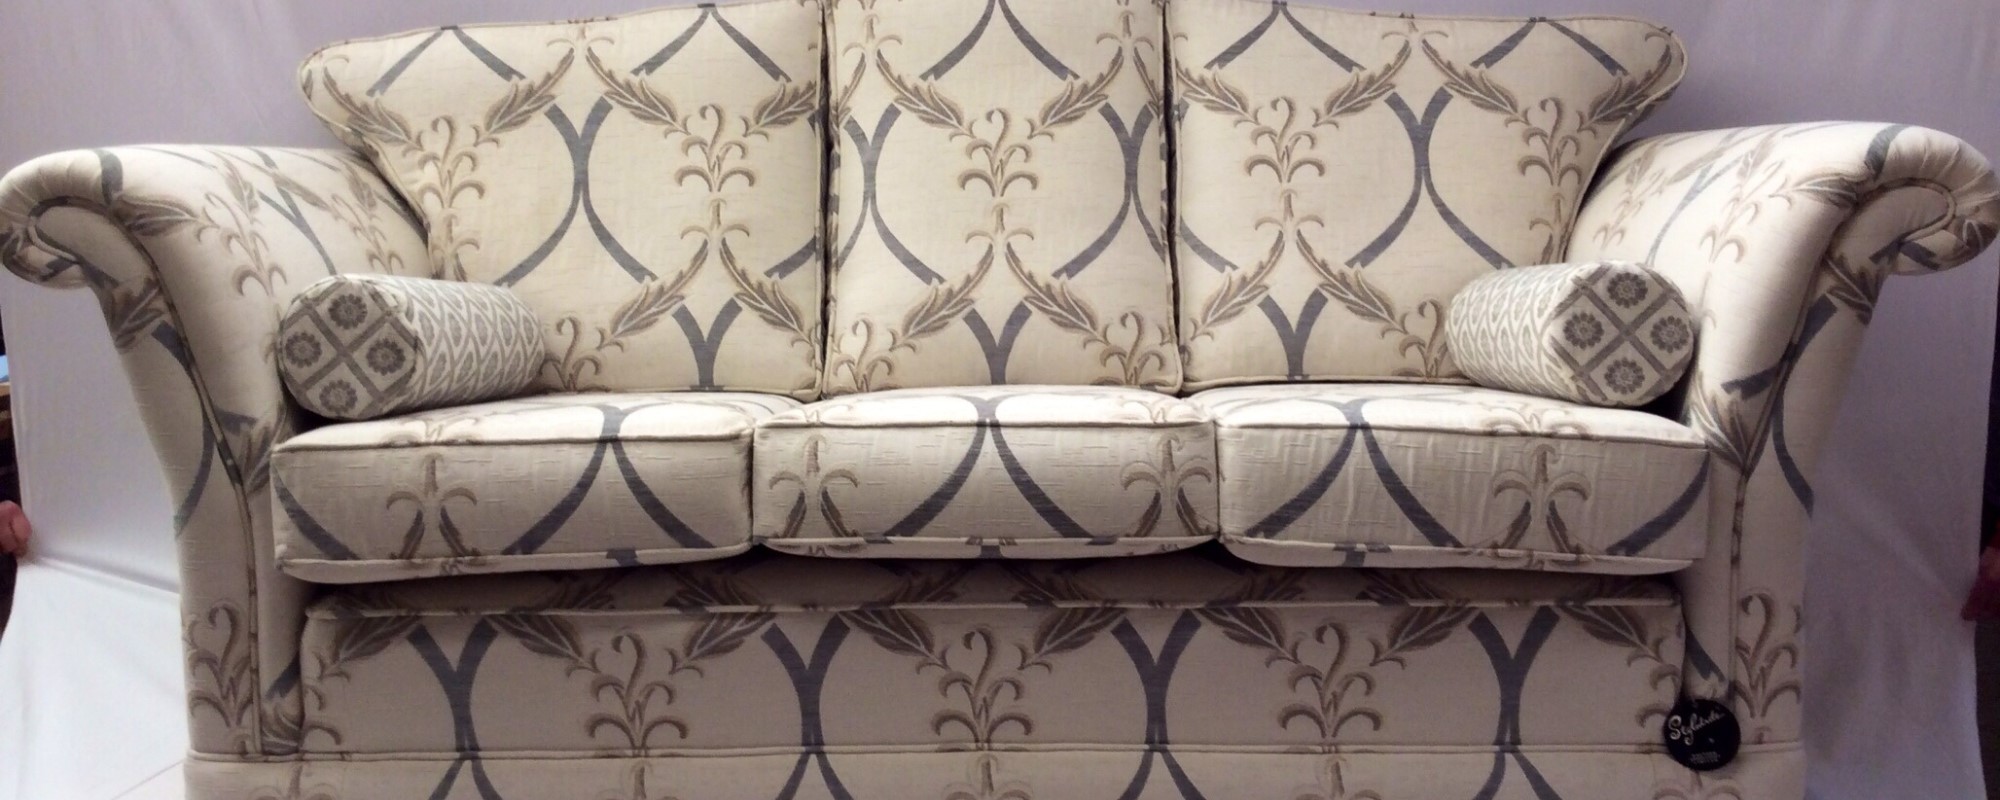 empress sofa designs ralvern upholstery cannock